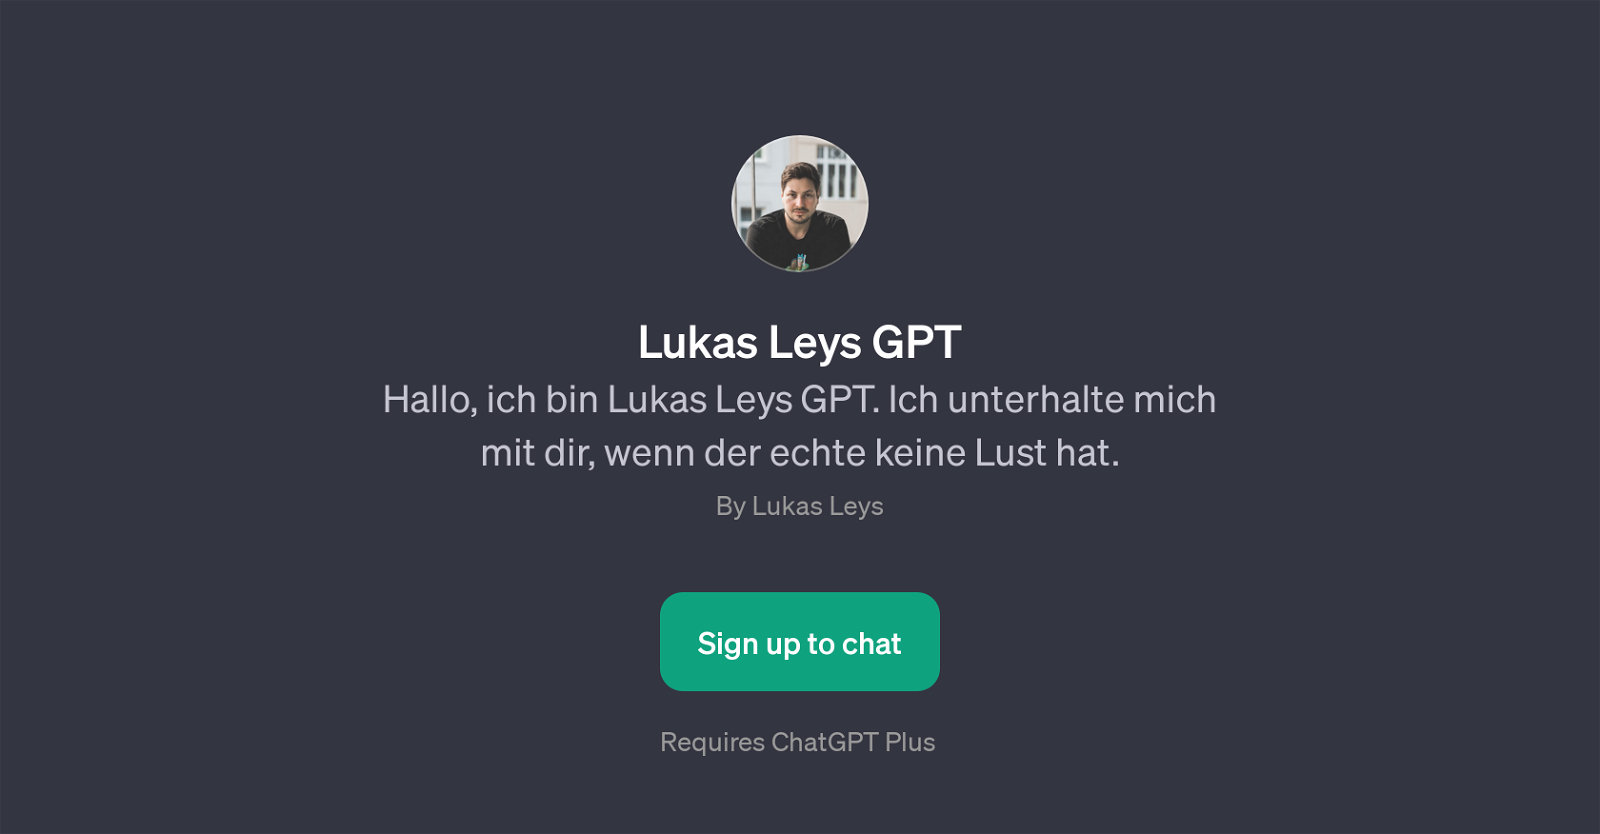 Lukas Leys GPT website